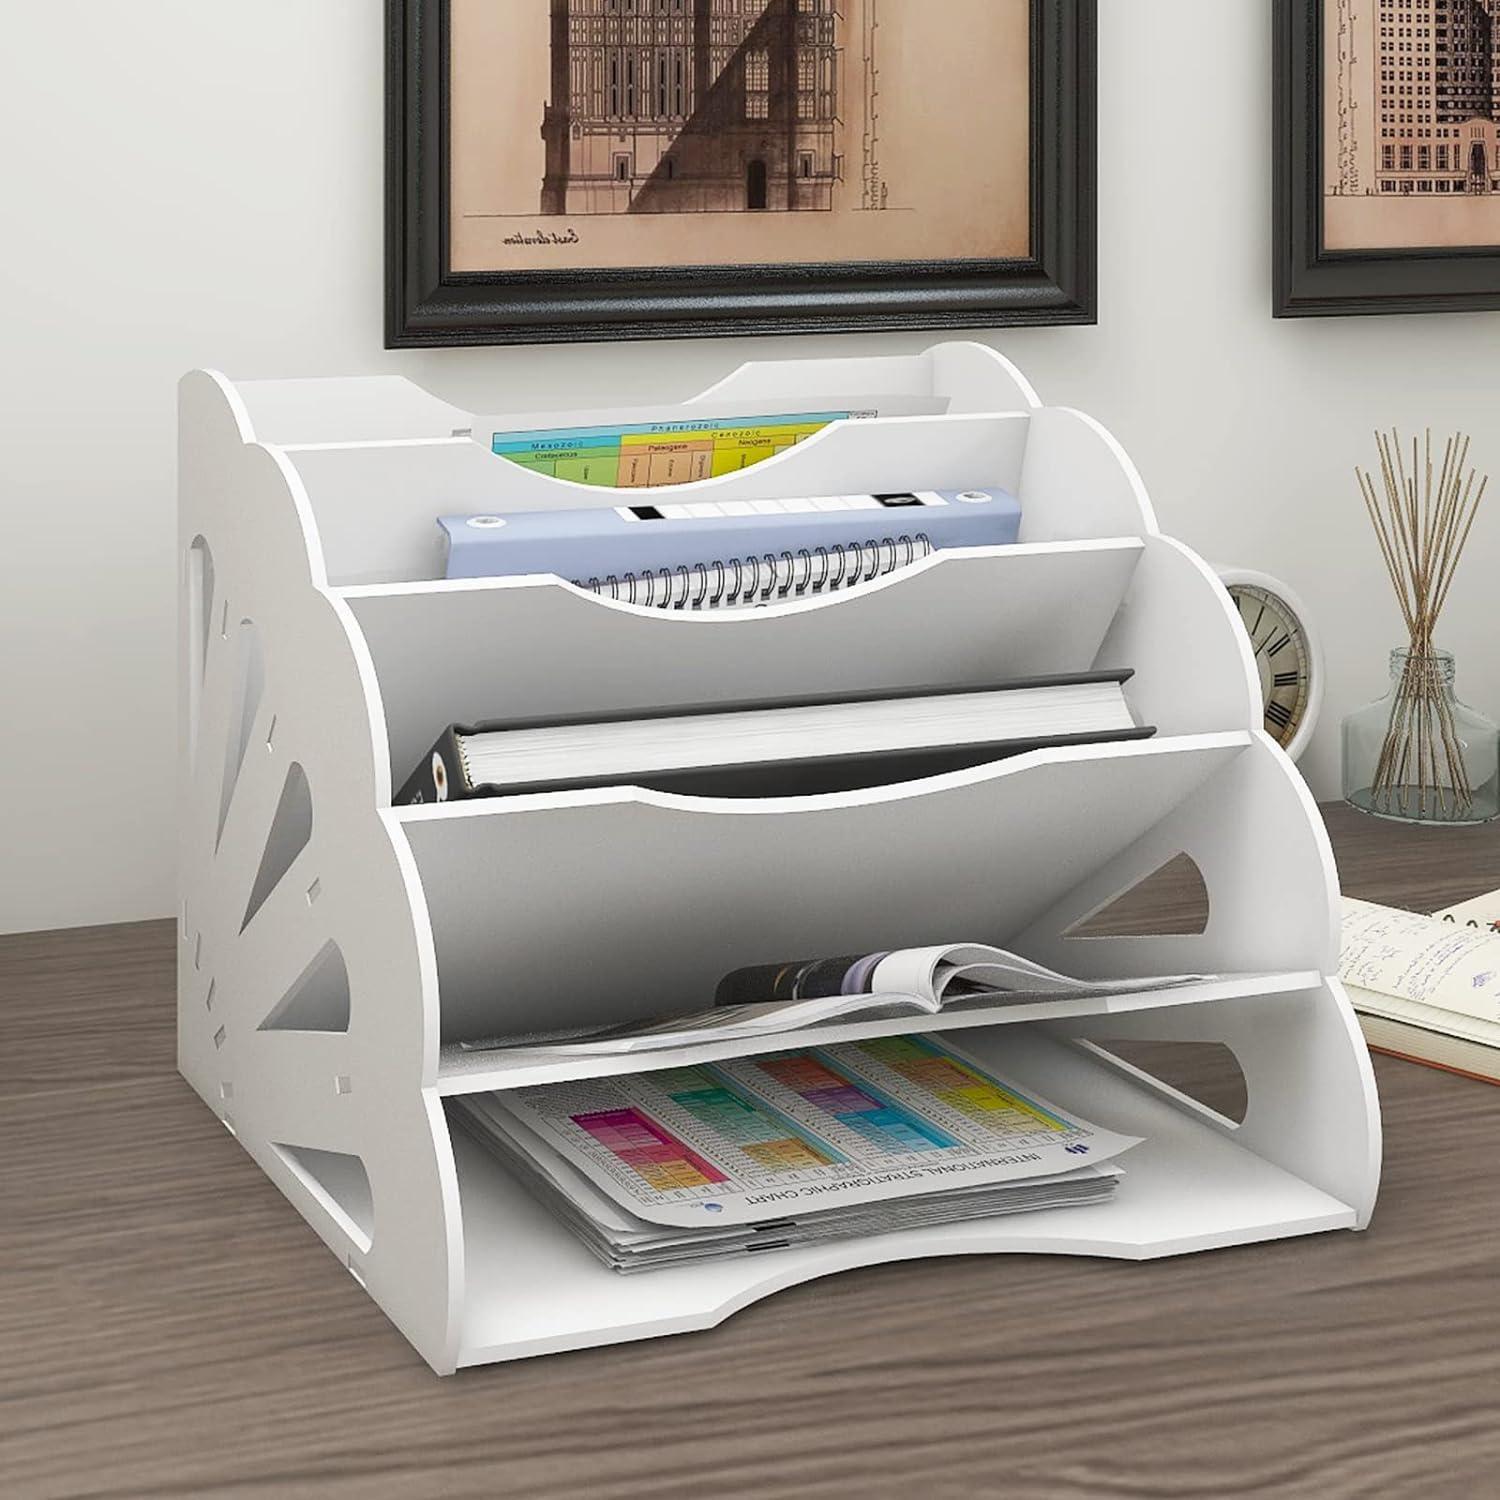 natwind 5 sectors fan shaped file folder organizer desktop white office supplies storage desk organizer mail